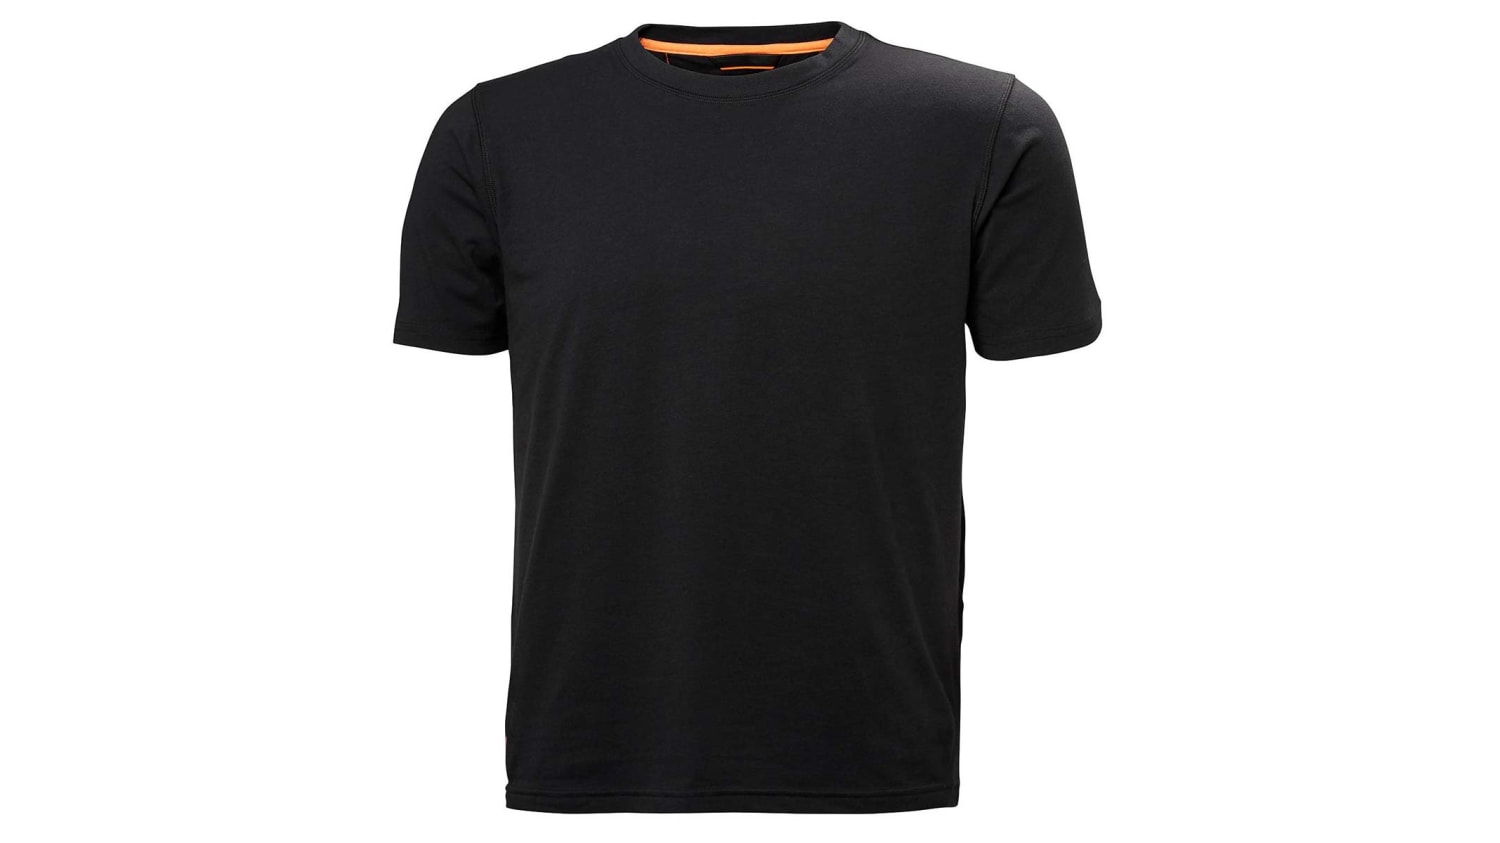 | Helly Hansen Black Cotton Short Sleeve T-Shirt, EUR- S | RS Components